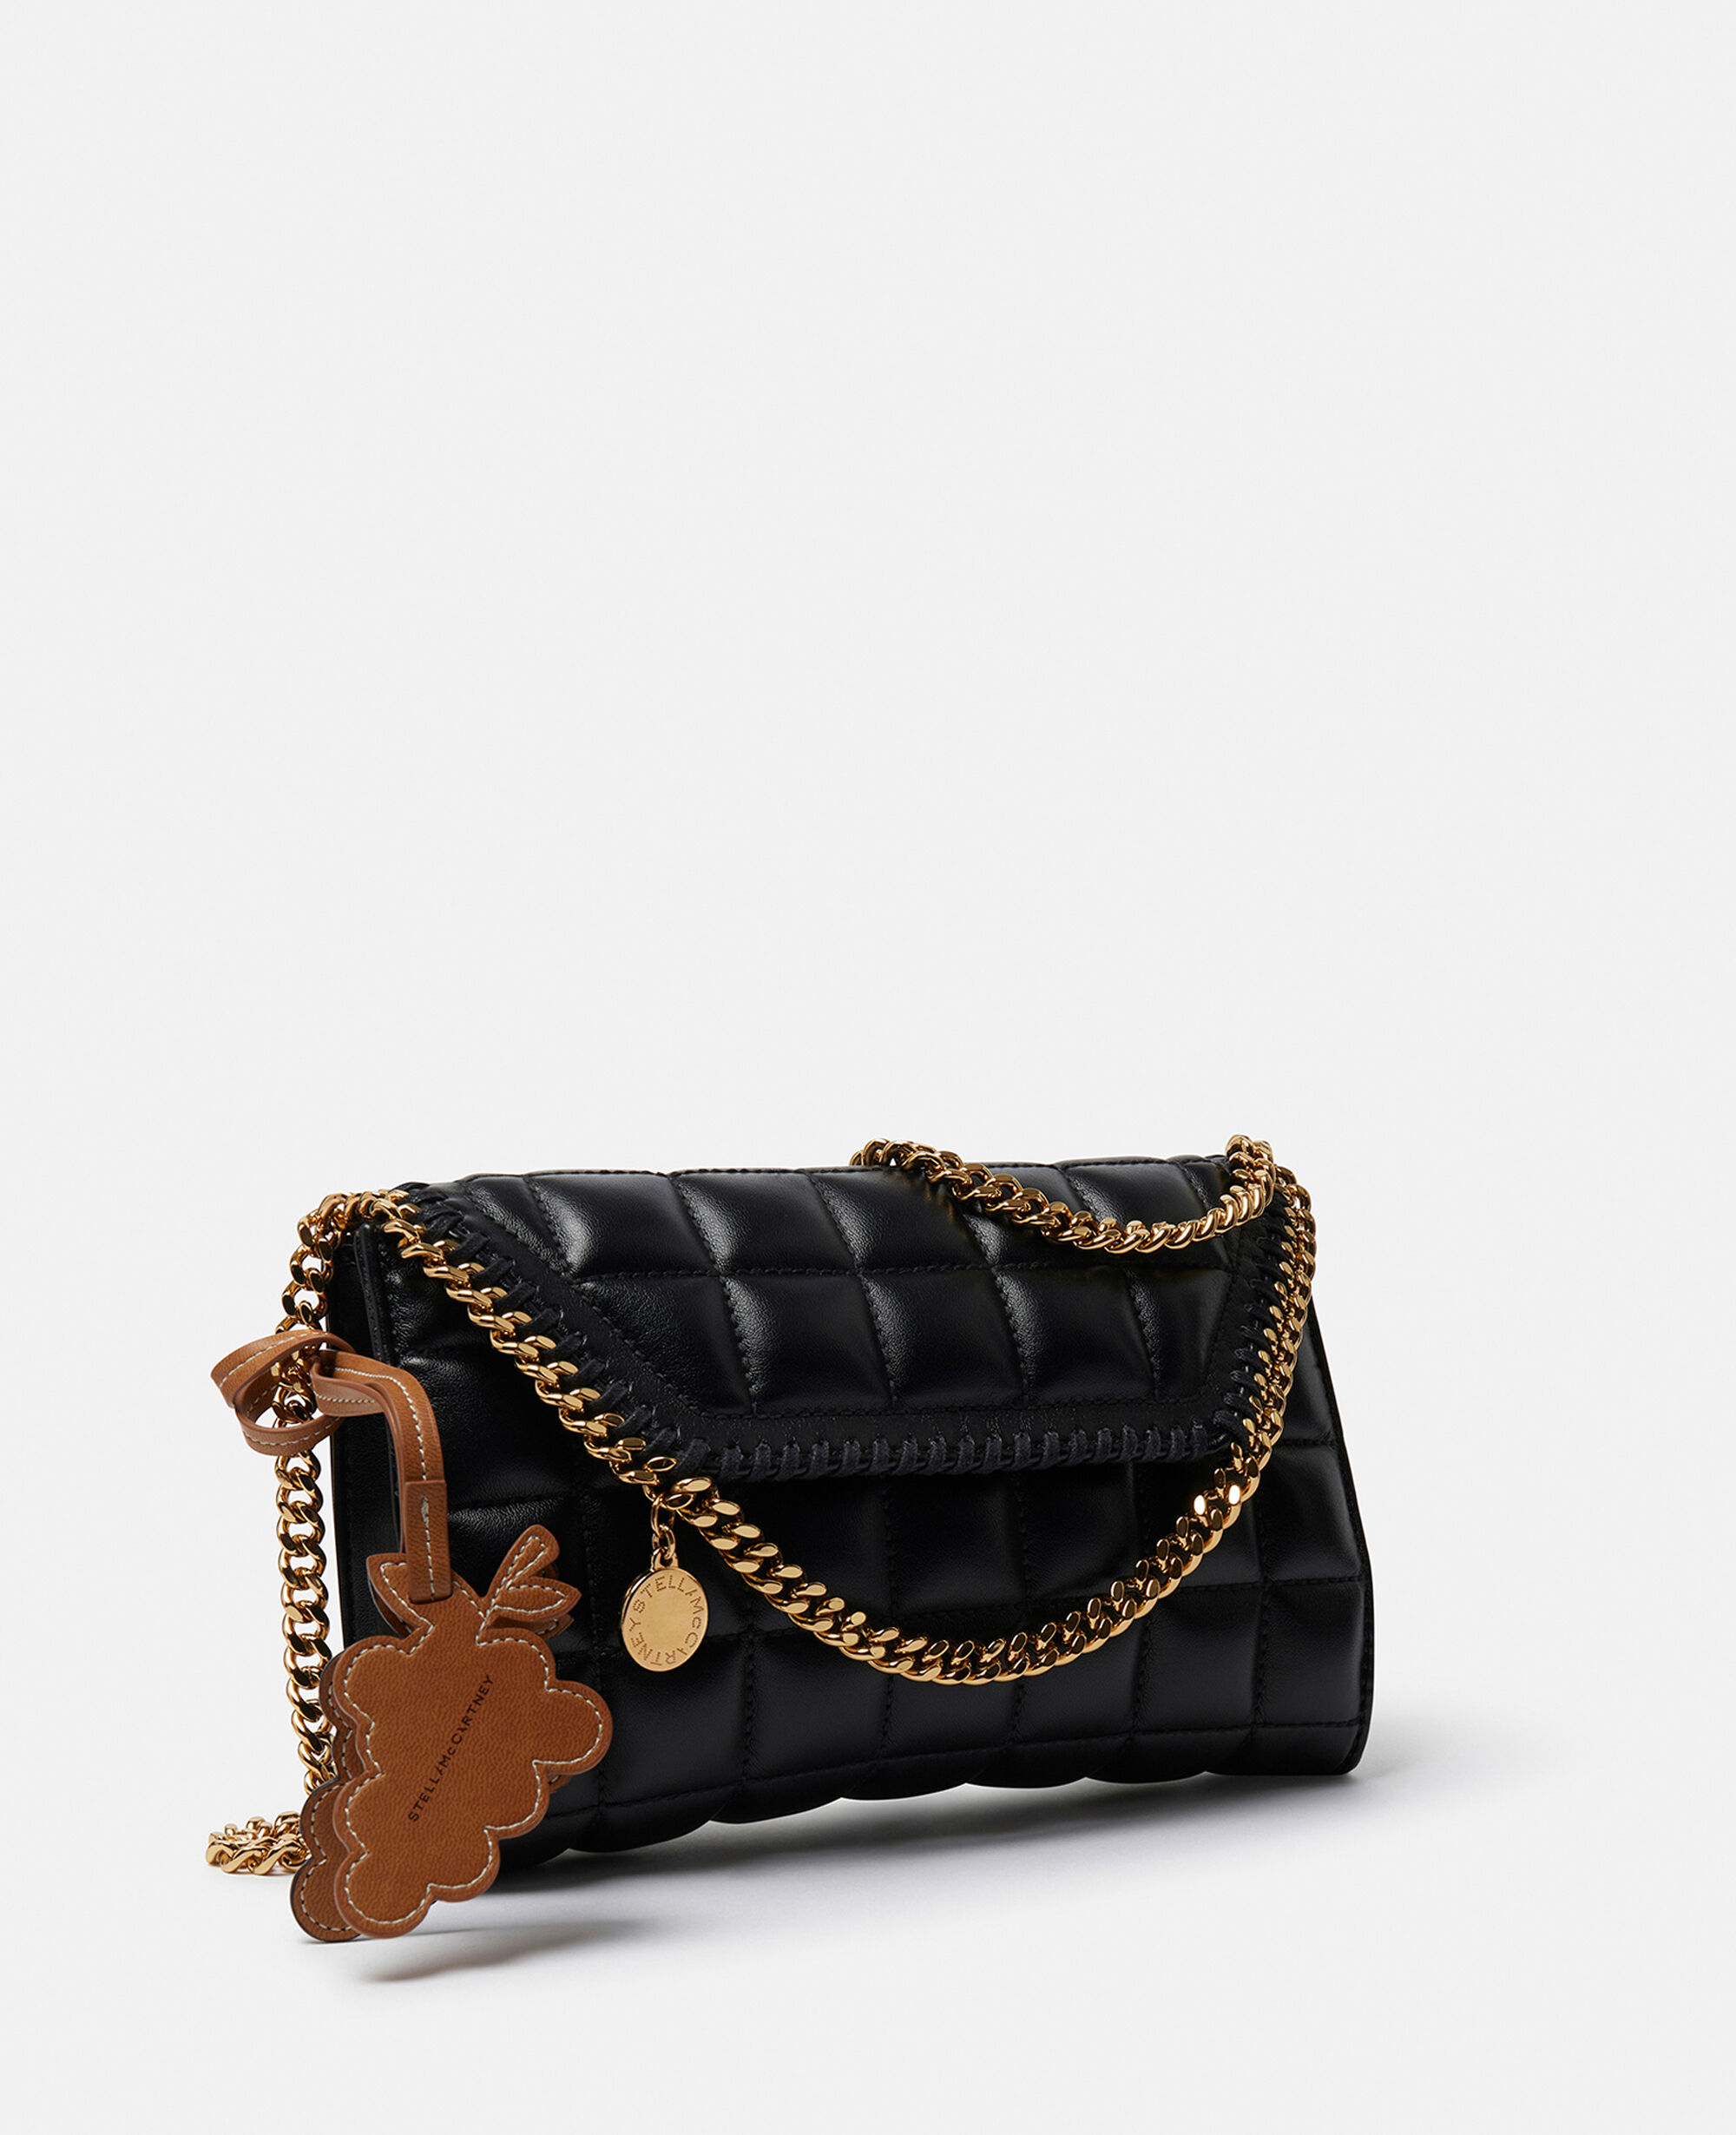 Stella McCartney bags : r/handbags